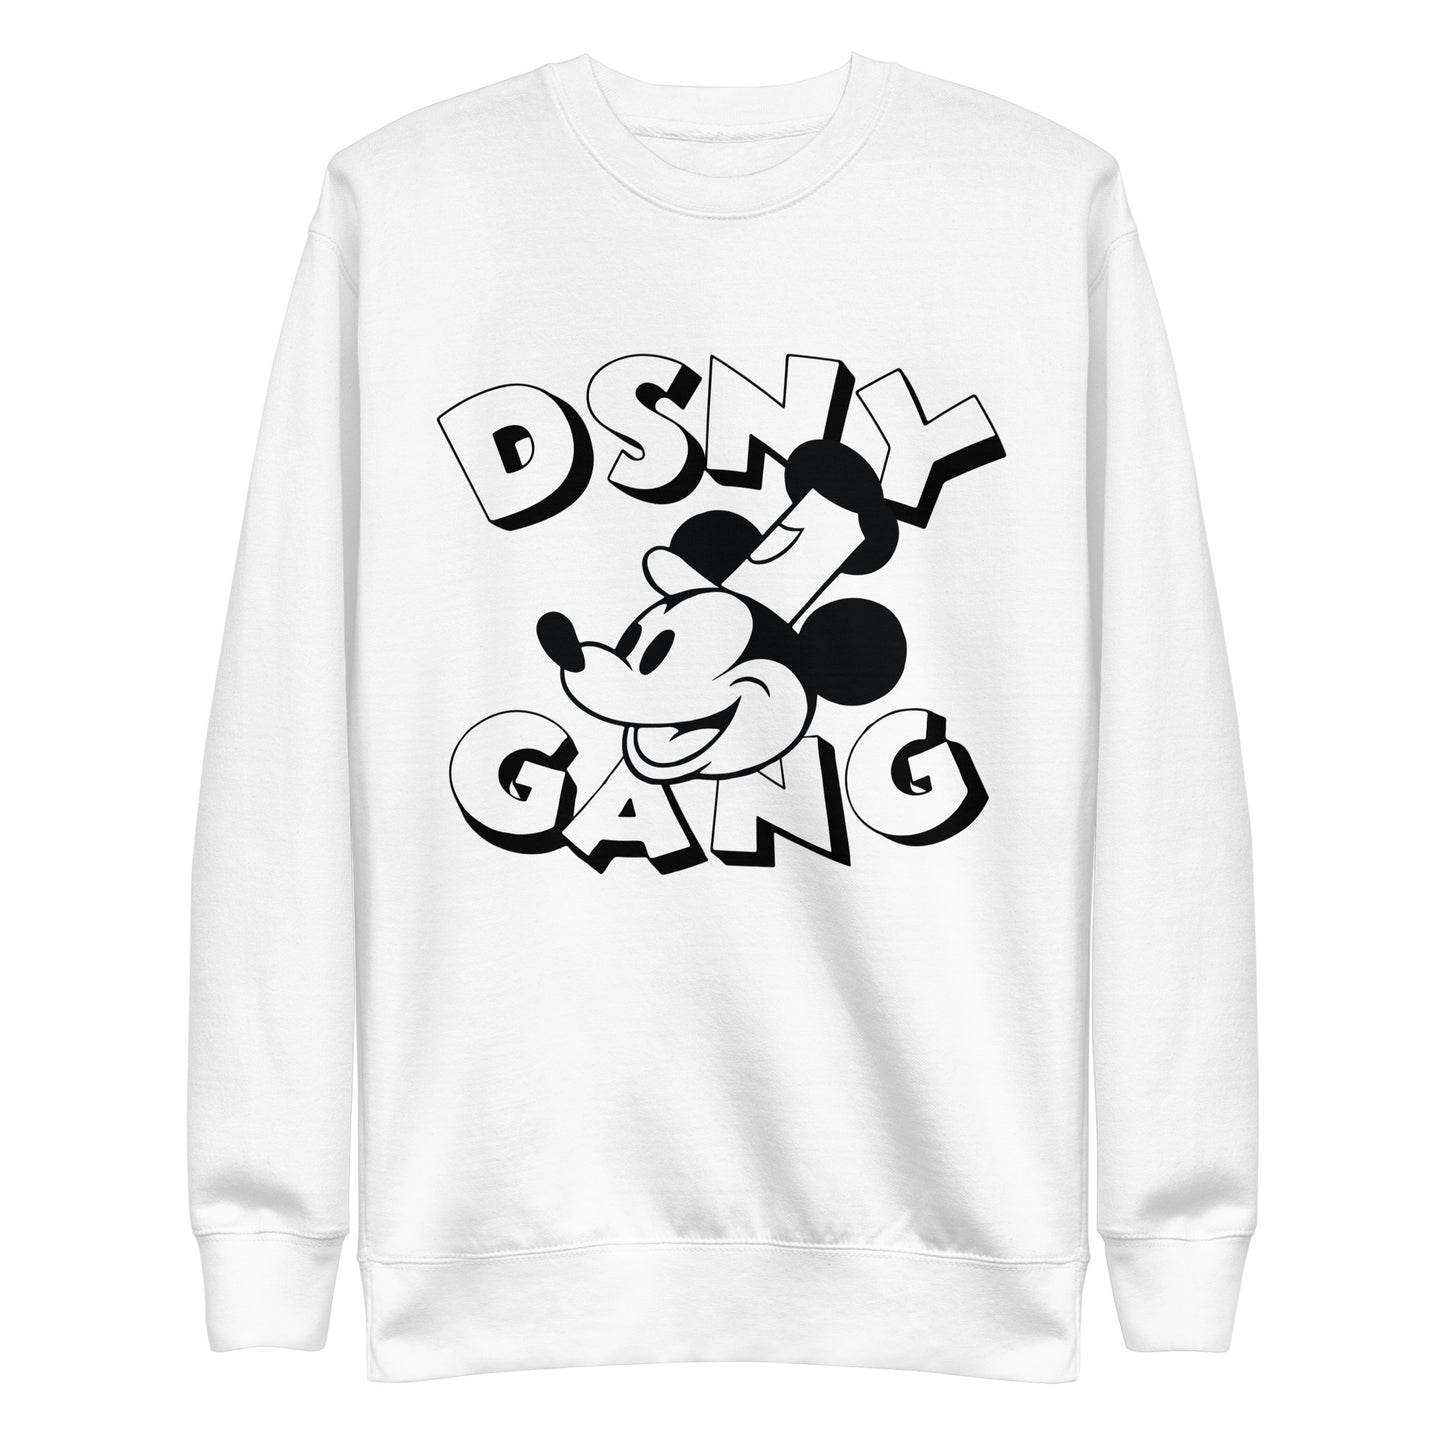 DSNY GANG Steamboat Willie Unisex Crewneck Sweatshirt